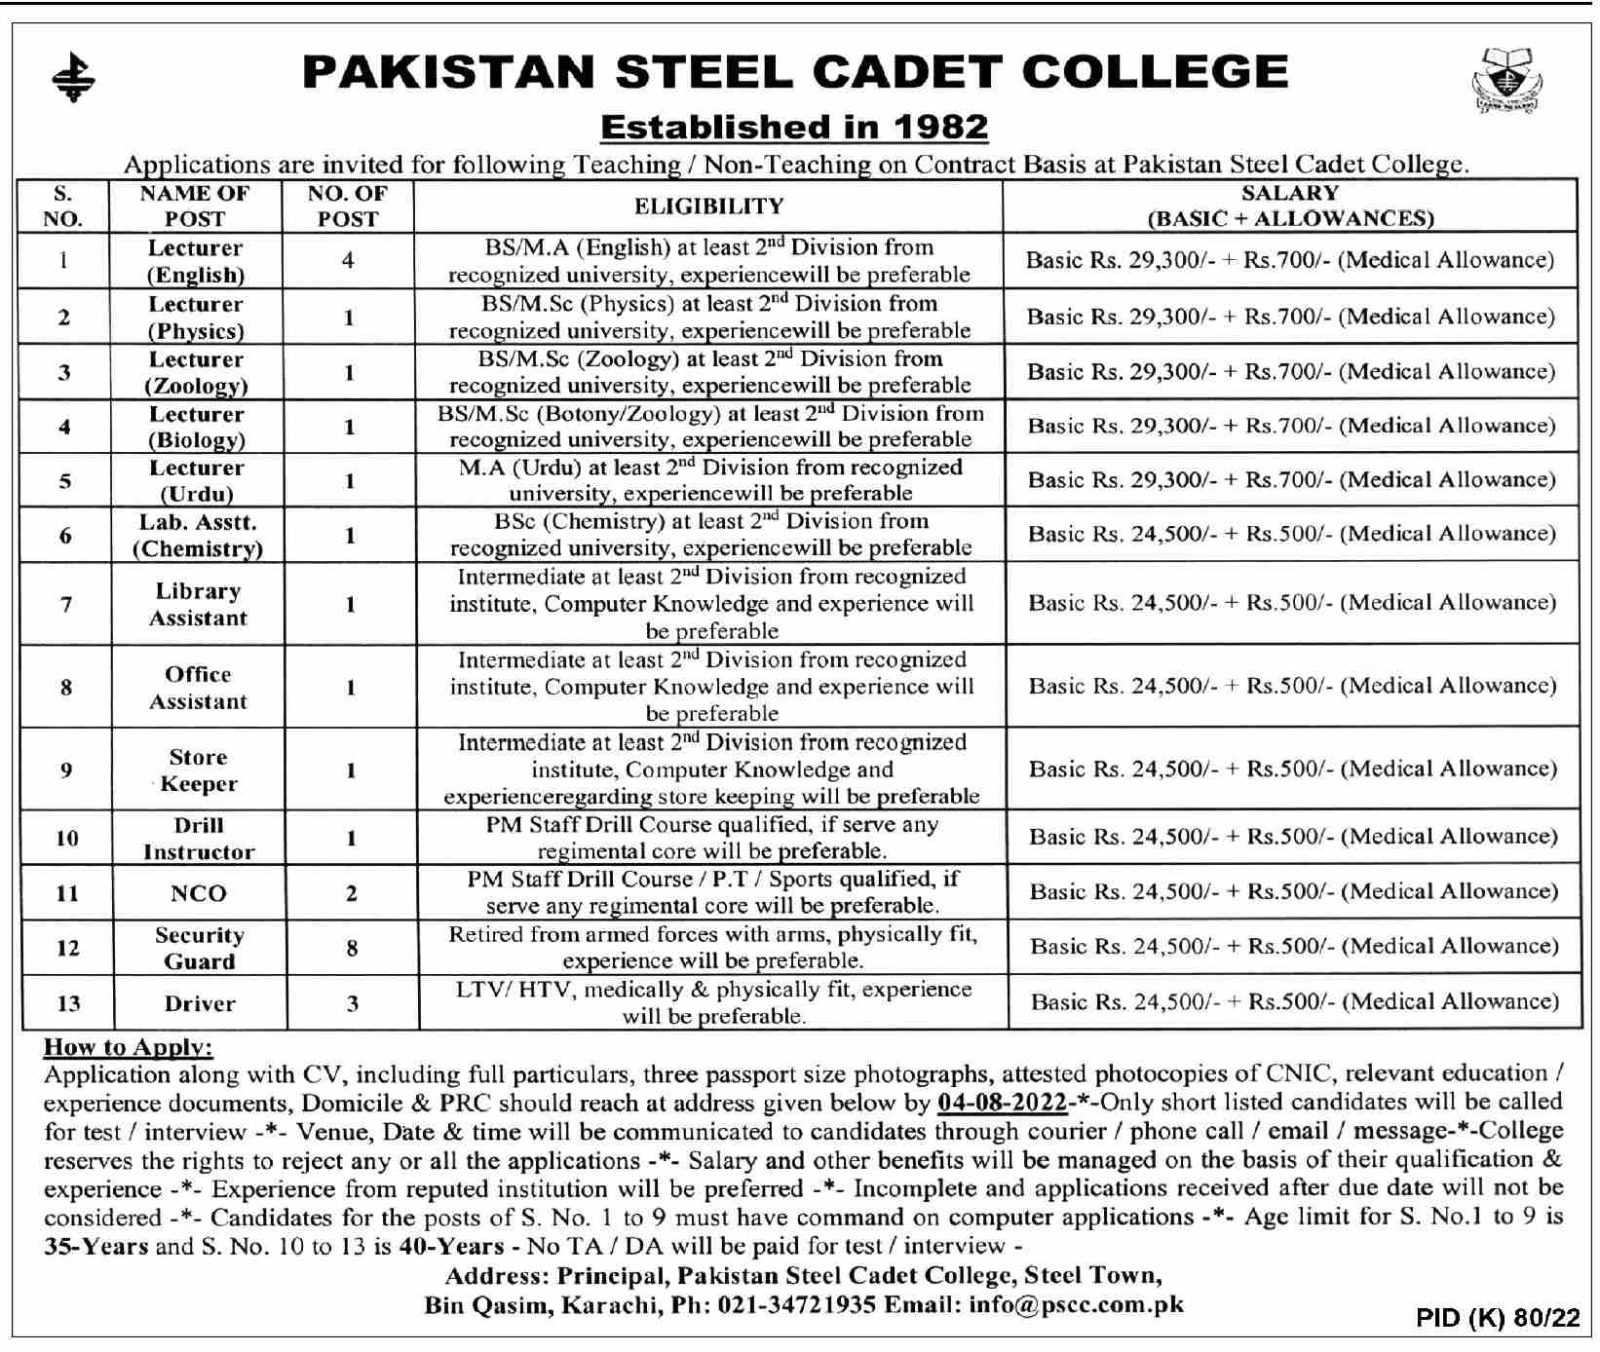 Jobs at Pakistan Steel Cadet College 2022